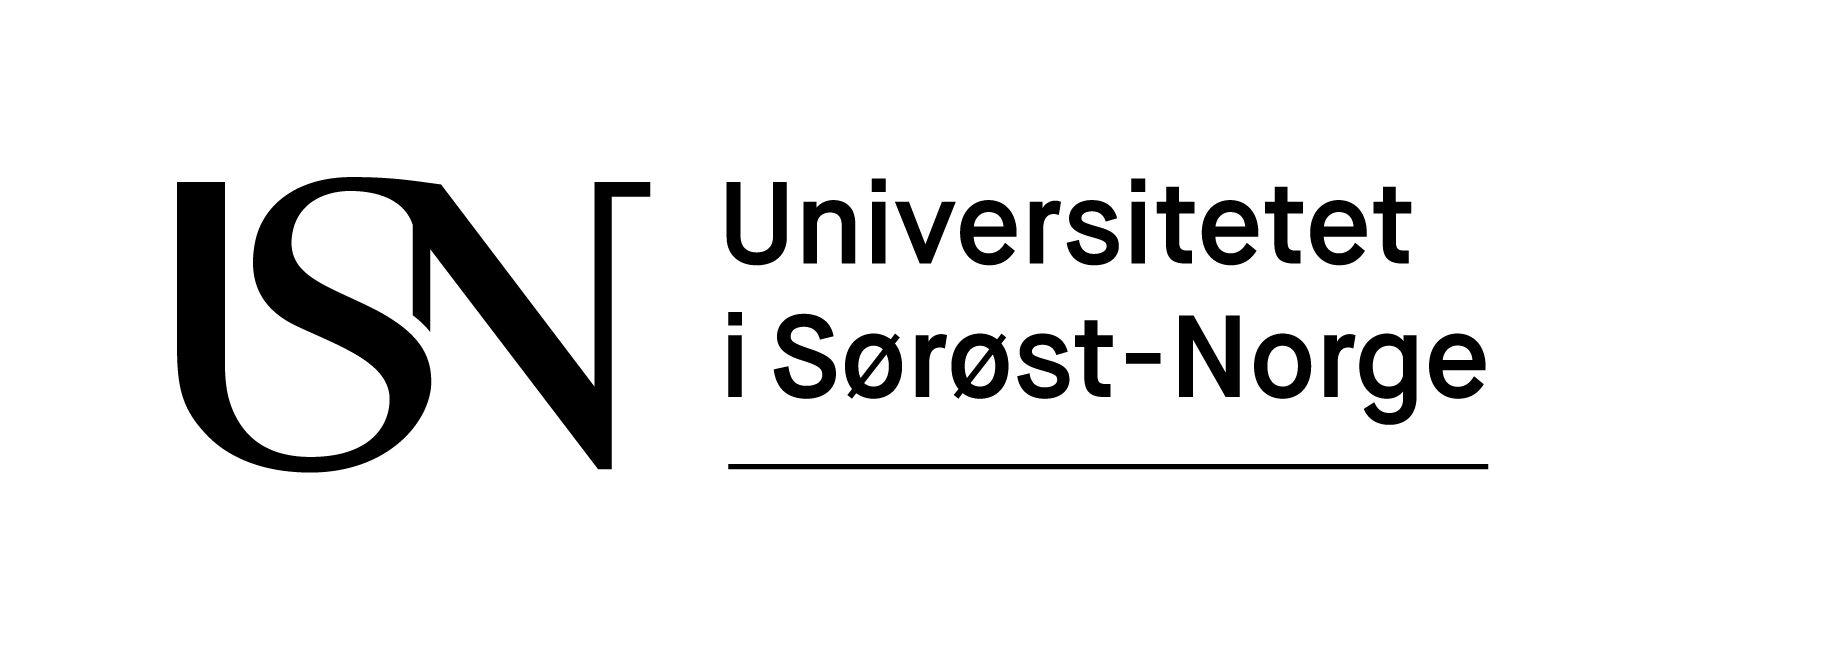 Logo USN